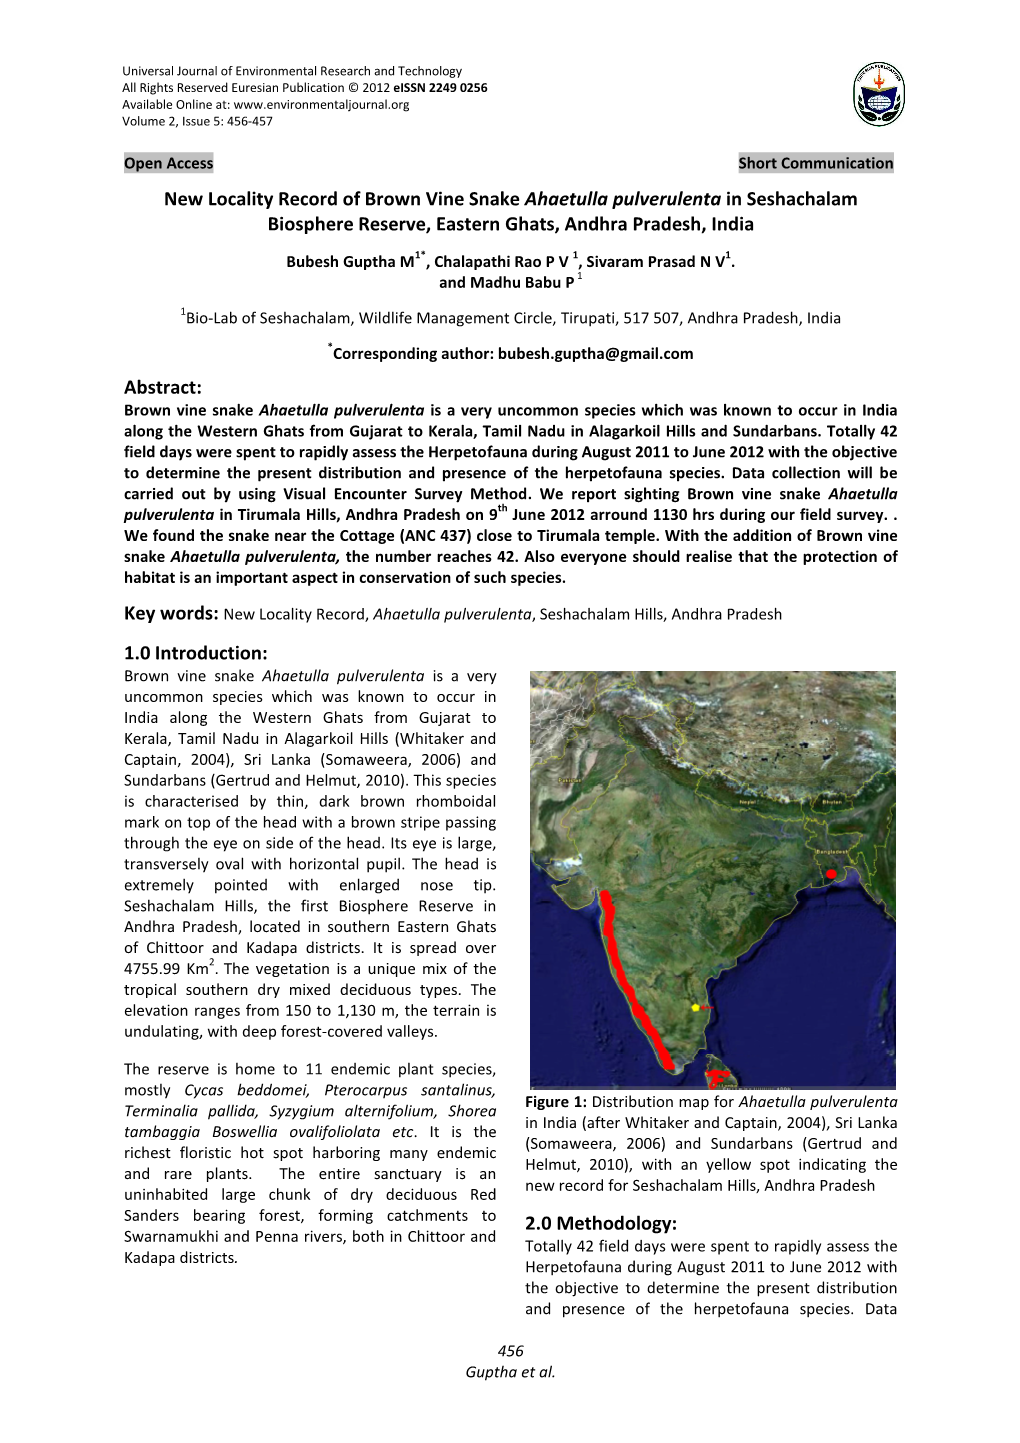 New Locality Record of Brown Vine Snake Ahaetulla Pulverulenta in Seshachalam Biosphere Reserve, Eastern Ghats, Andhra Pradesh, India